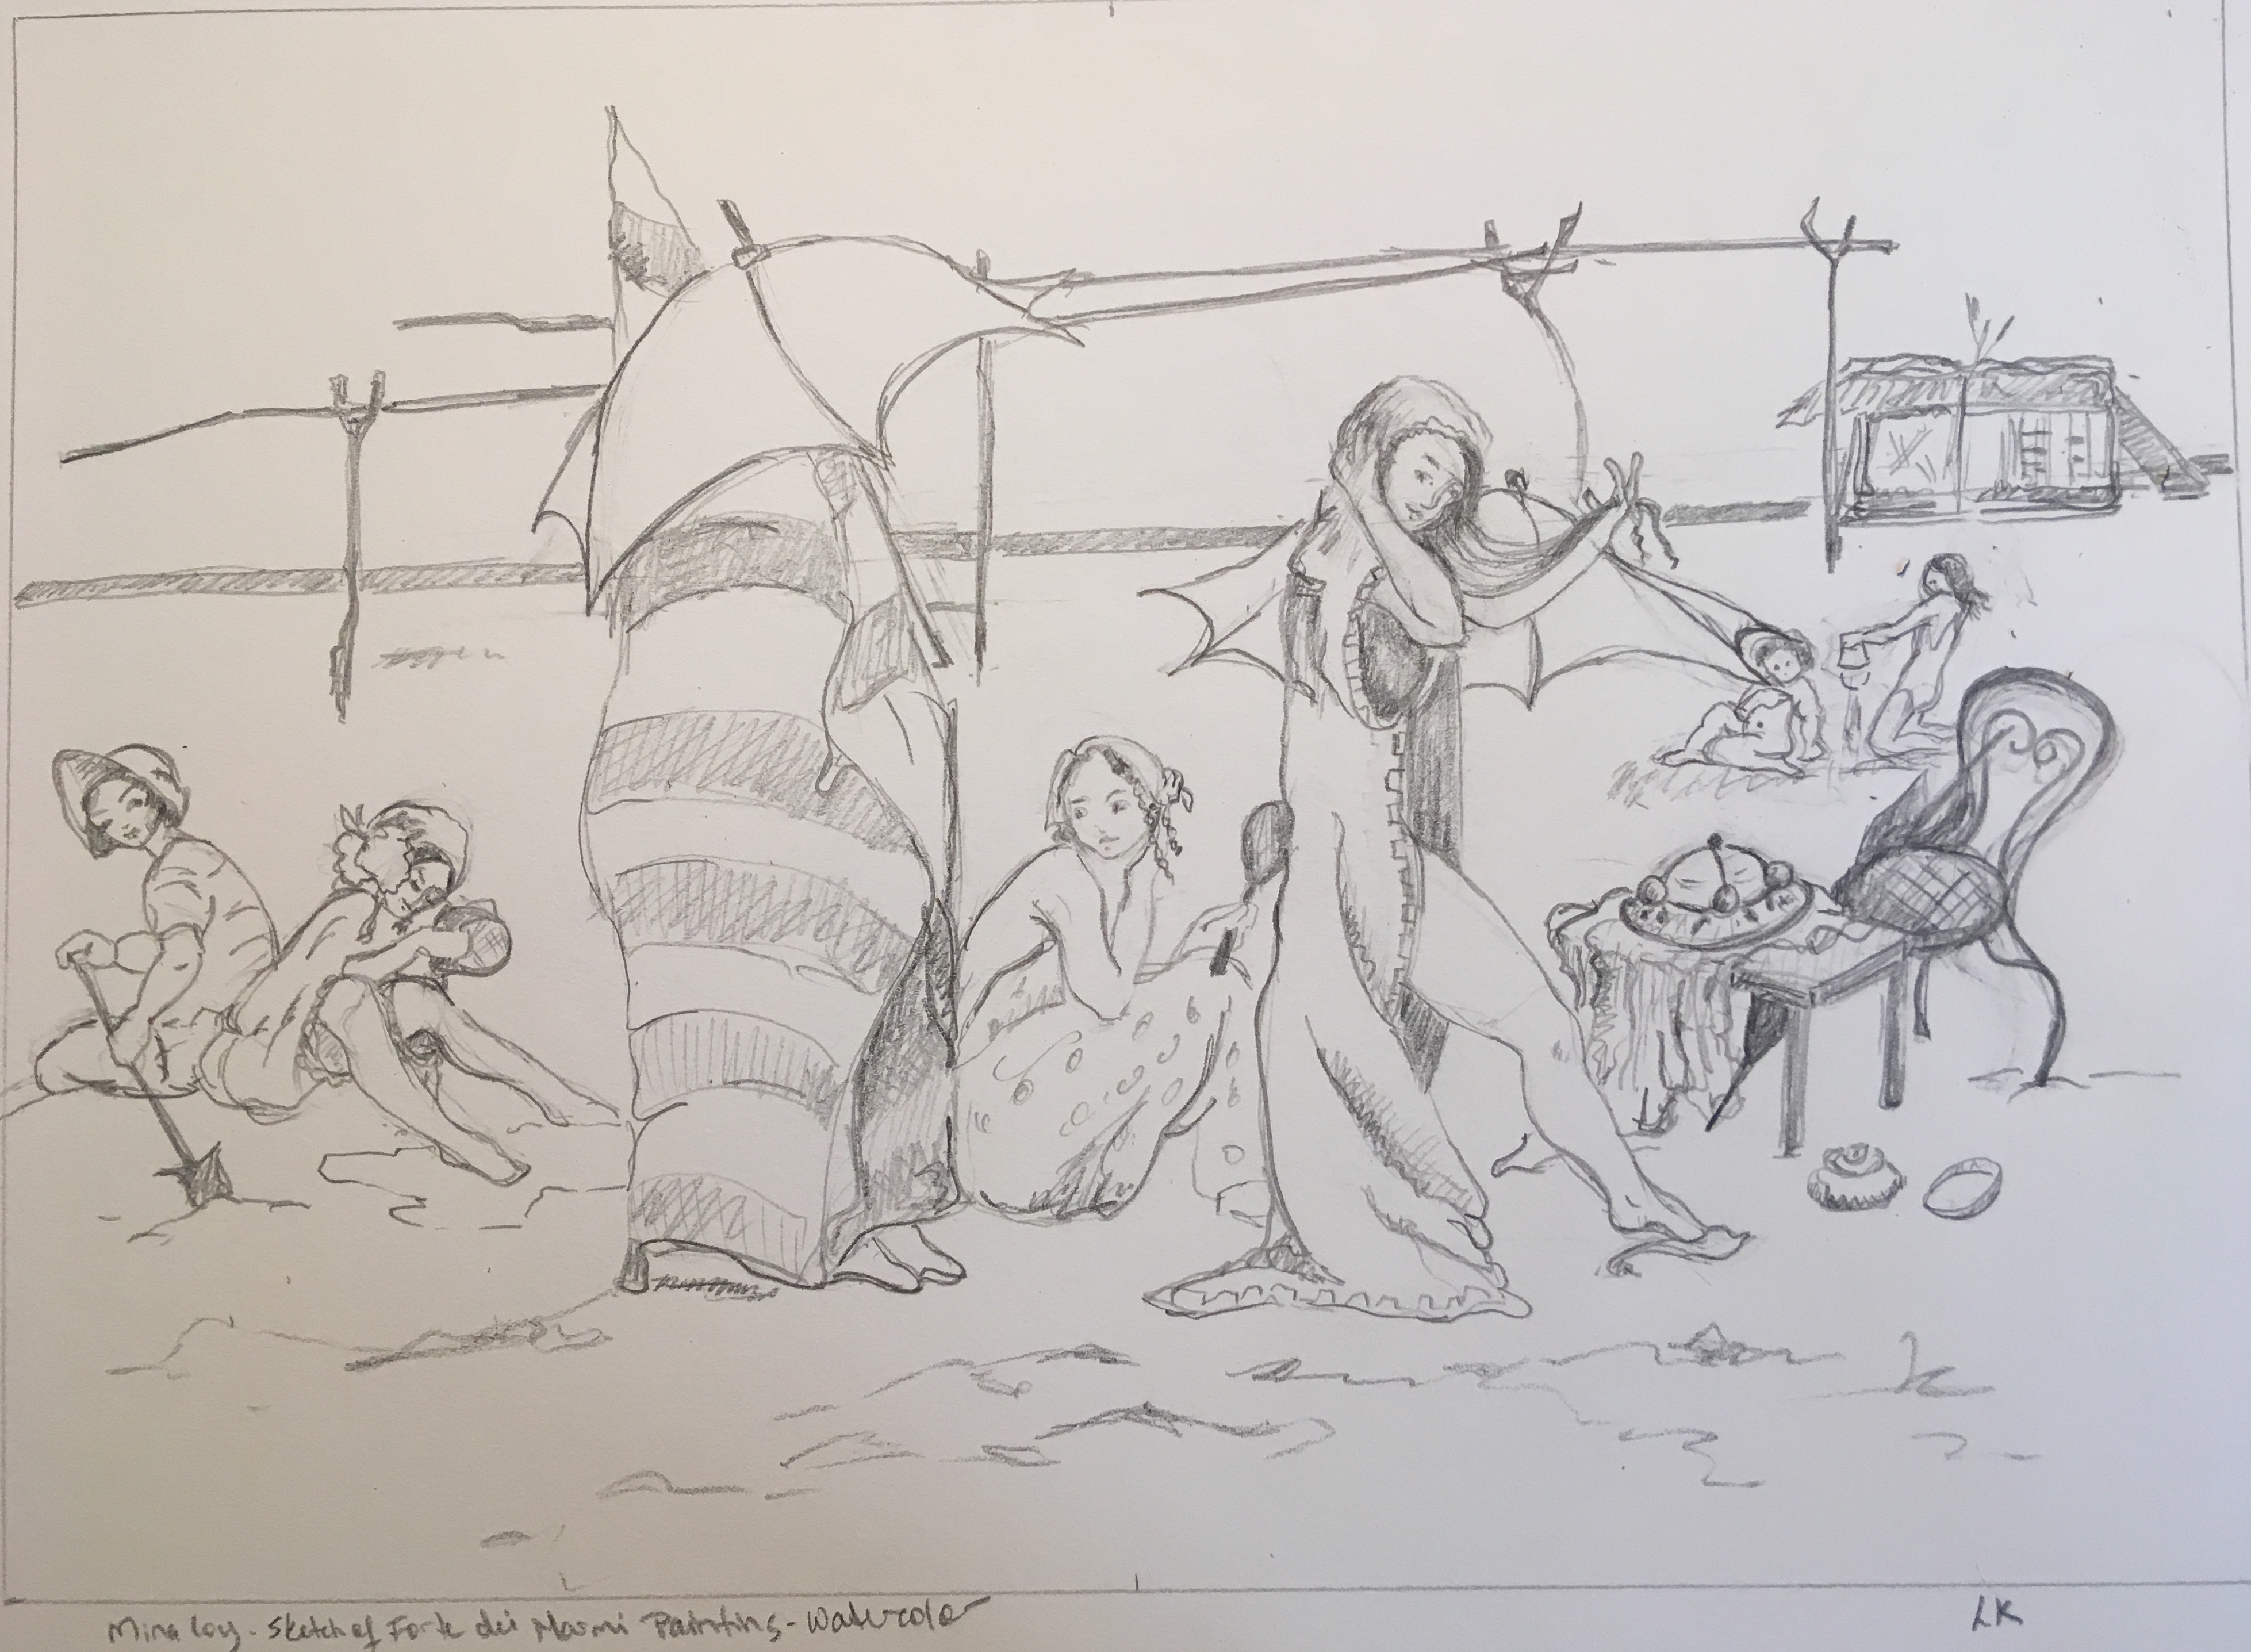 Pencil sketch of seaside scene